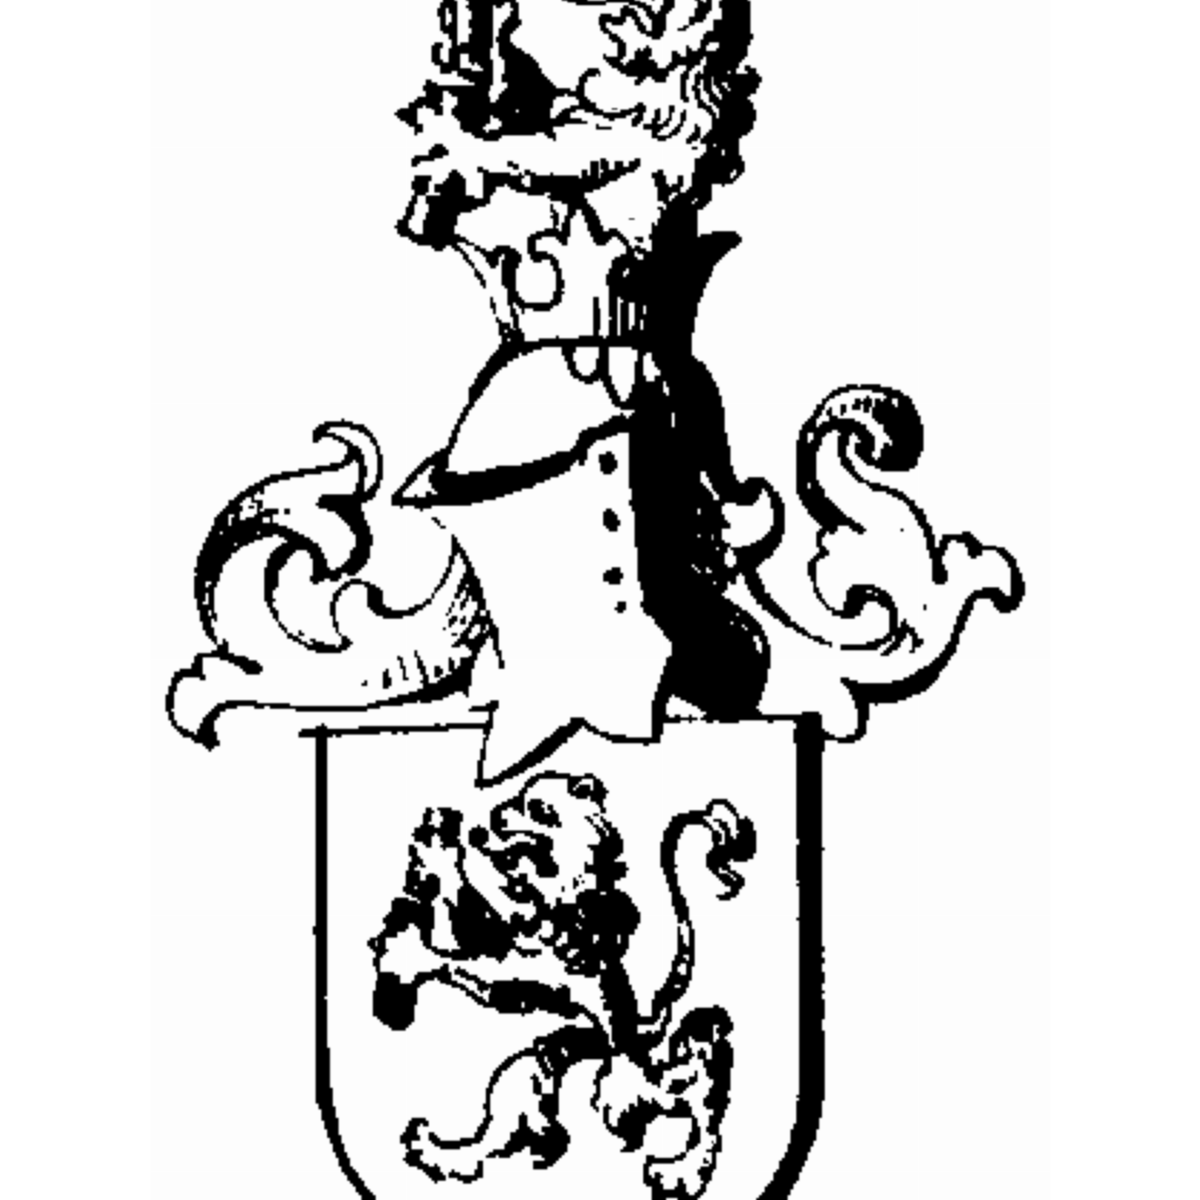 Escudo de la familia Desjardins